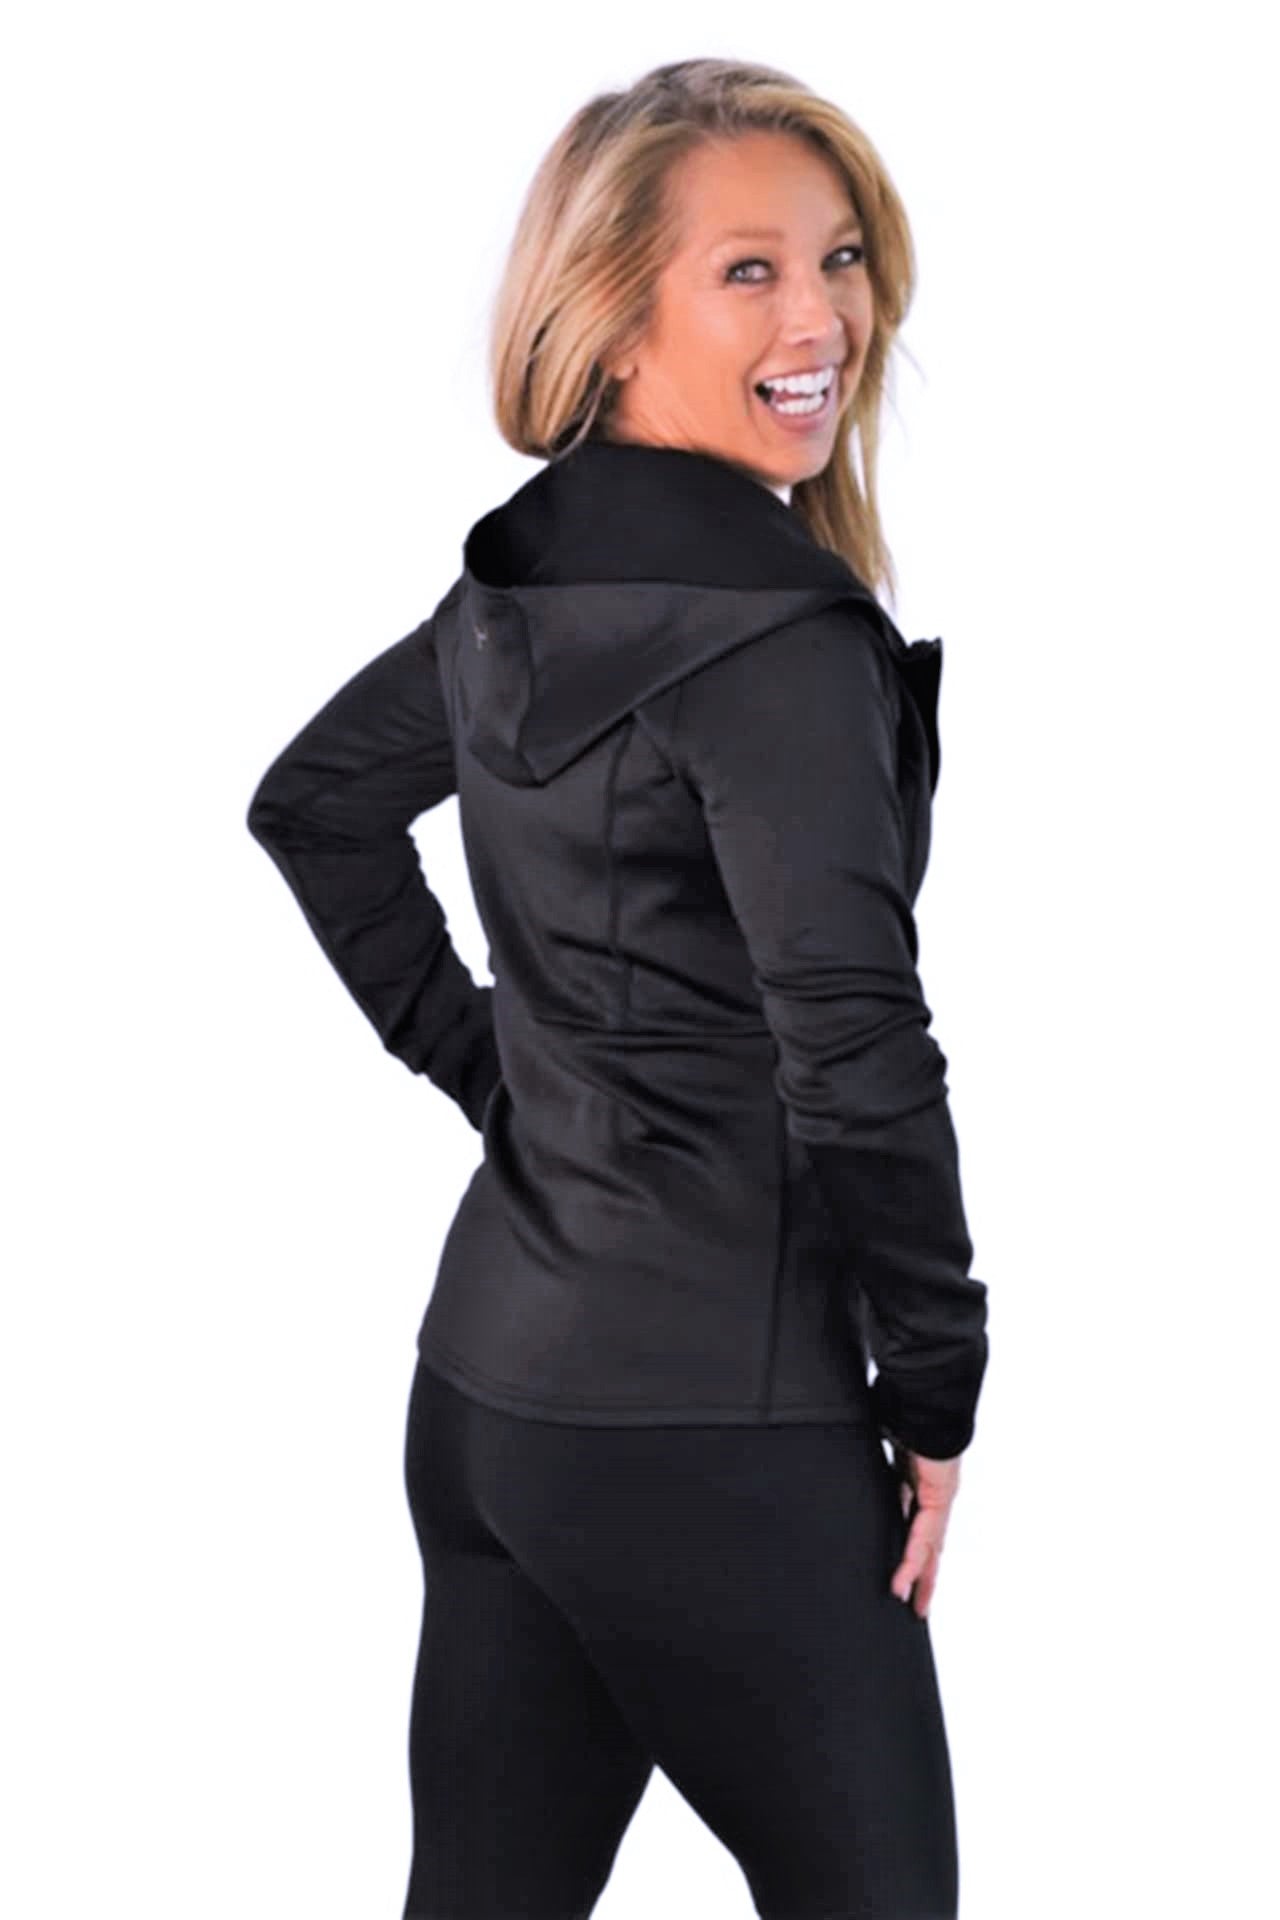 Denise Austin's Full Zip Workout Sports Jacket - Zipper Lightweight Black Hoodie